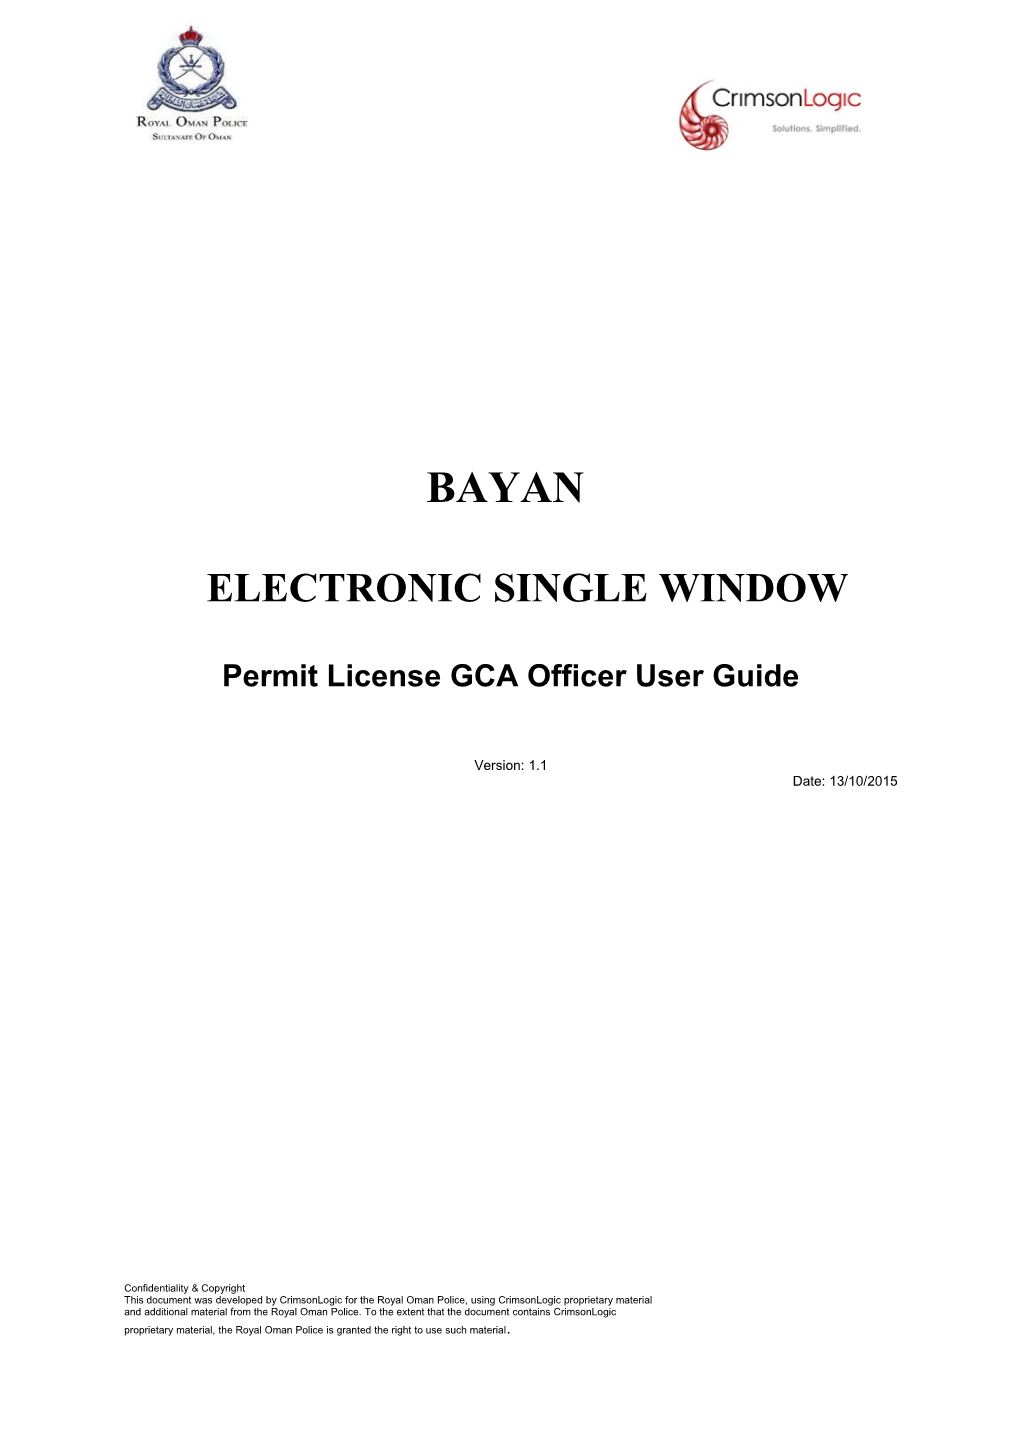 Permit License GCA Officer User Guide s1